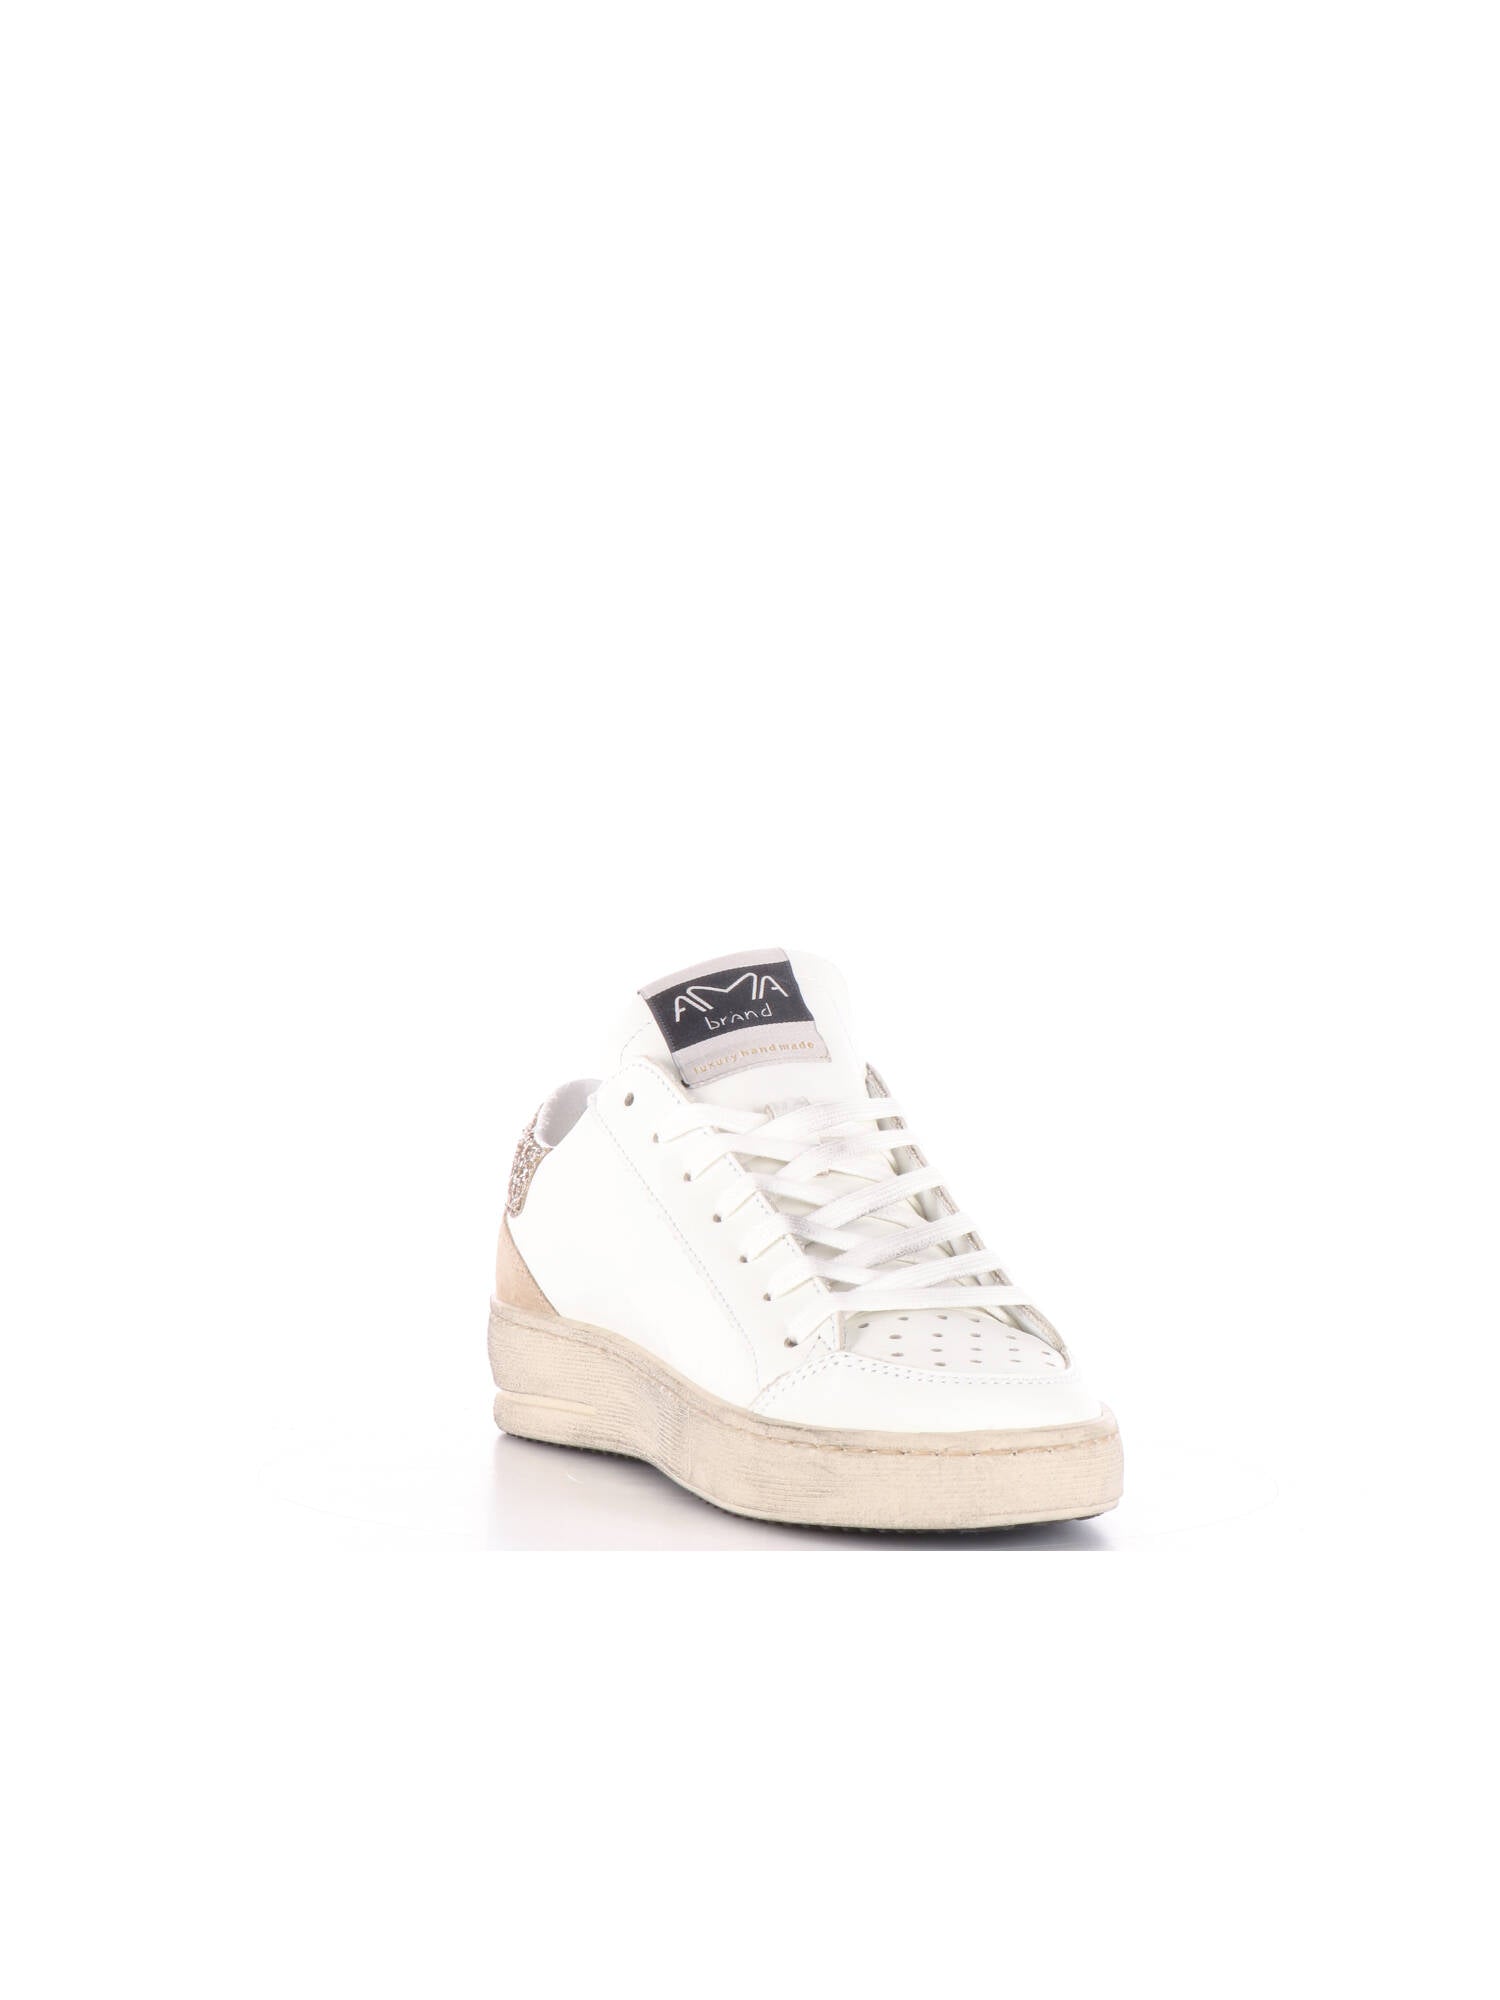 Ama-brand sneakers donna Slam bianco/beige